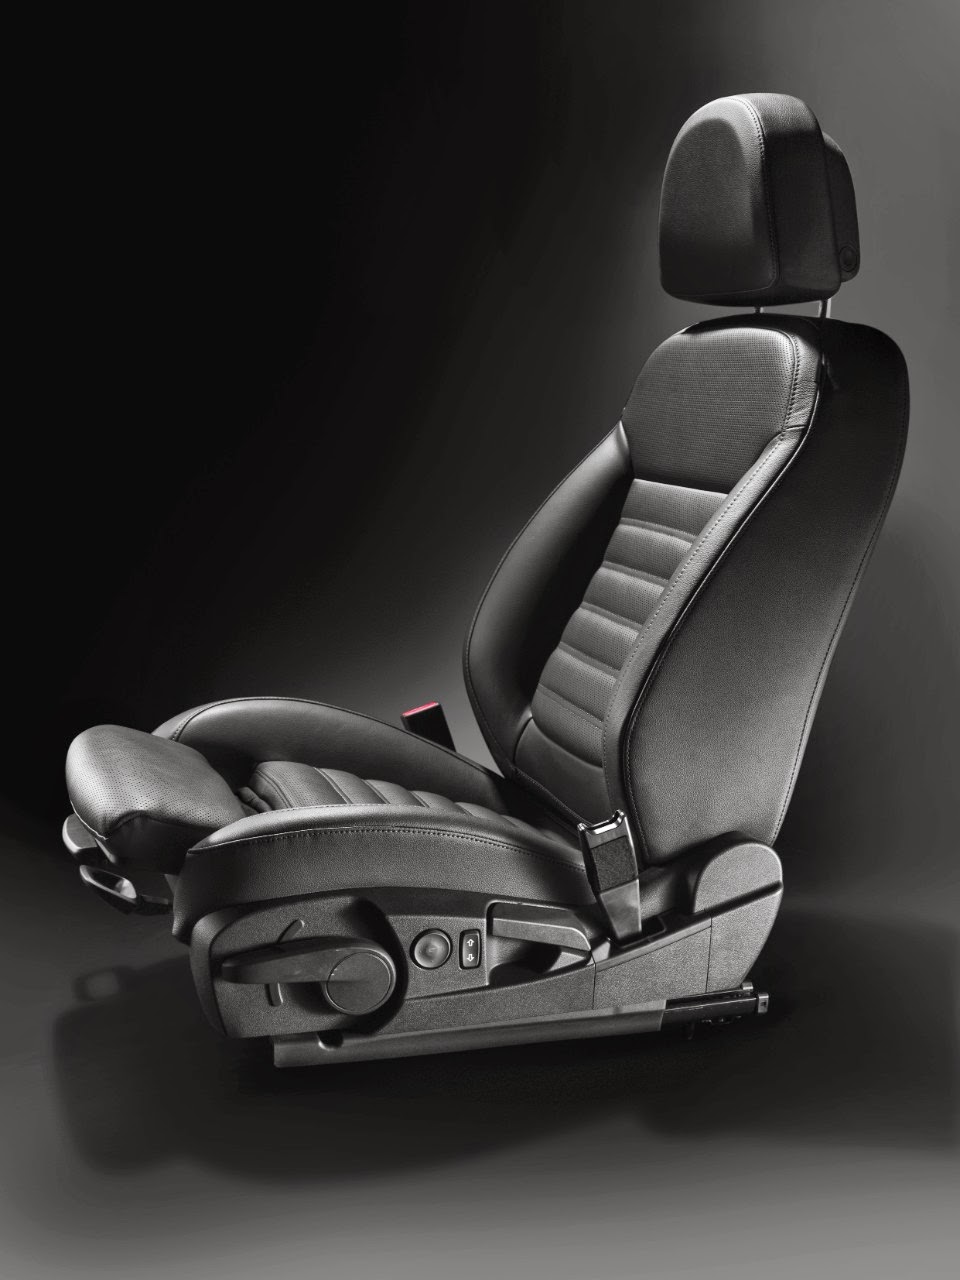 OPEL: Εργονομικά καθίσματα για Opel Insignia, Meriva και άλλα μοντέλα - Πιστοποίηση AGR (Campaign for Healthier Backs) - Φωτογραφία 6